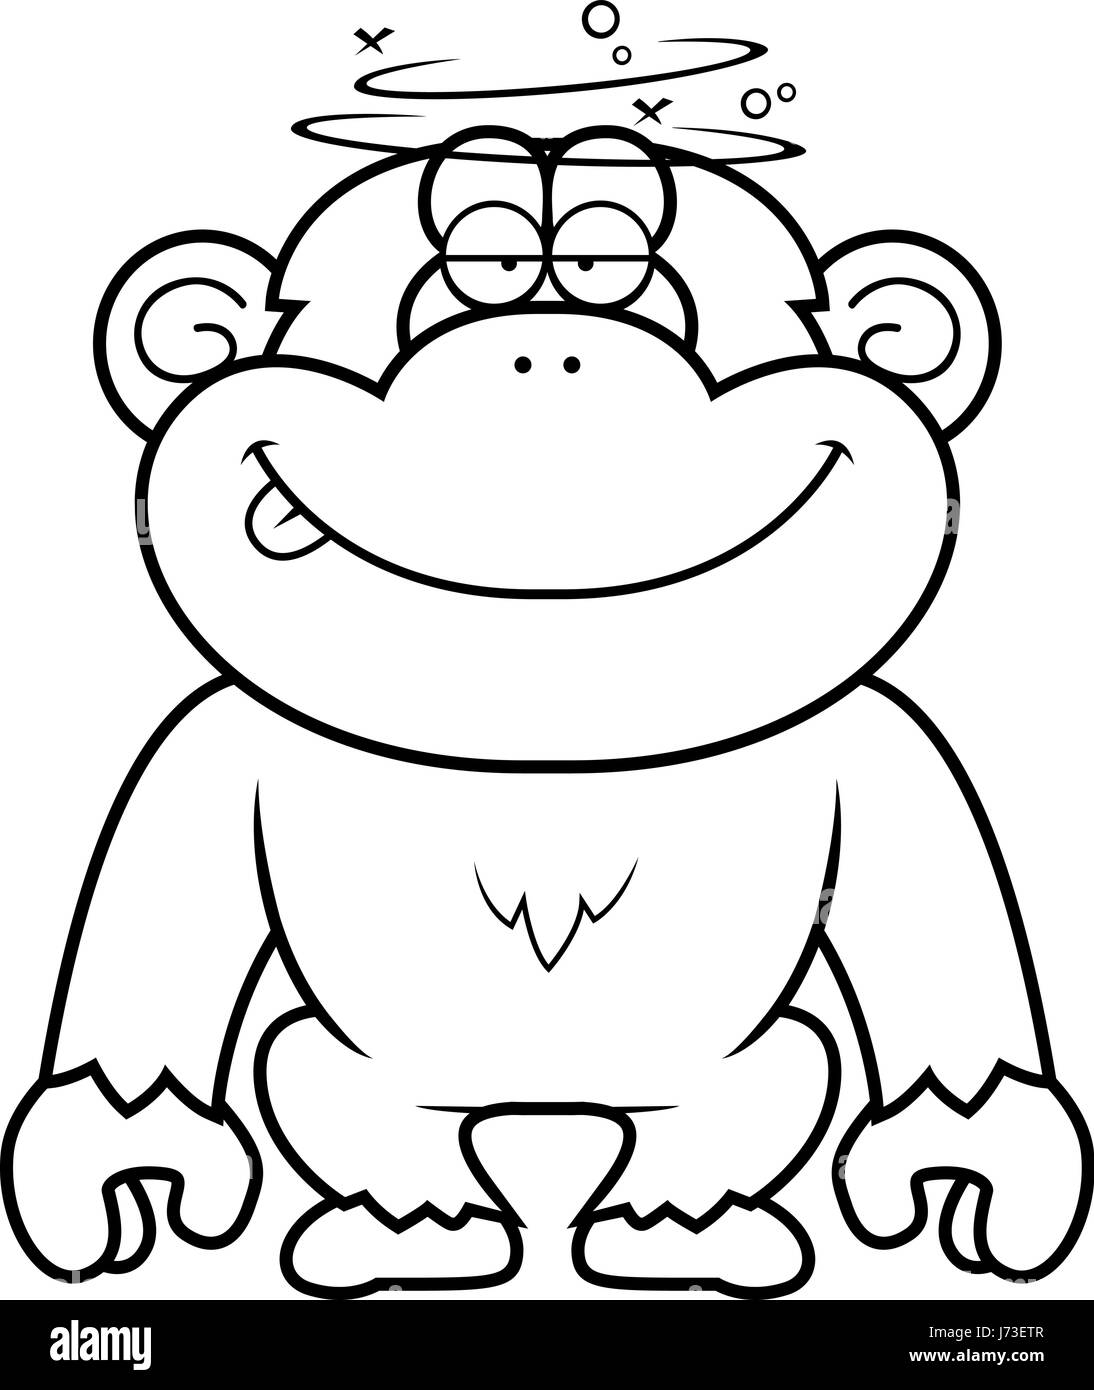 A cartoon illustration of a stupid chimpanzee. Stock Vector